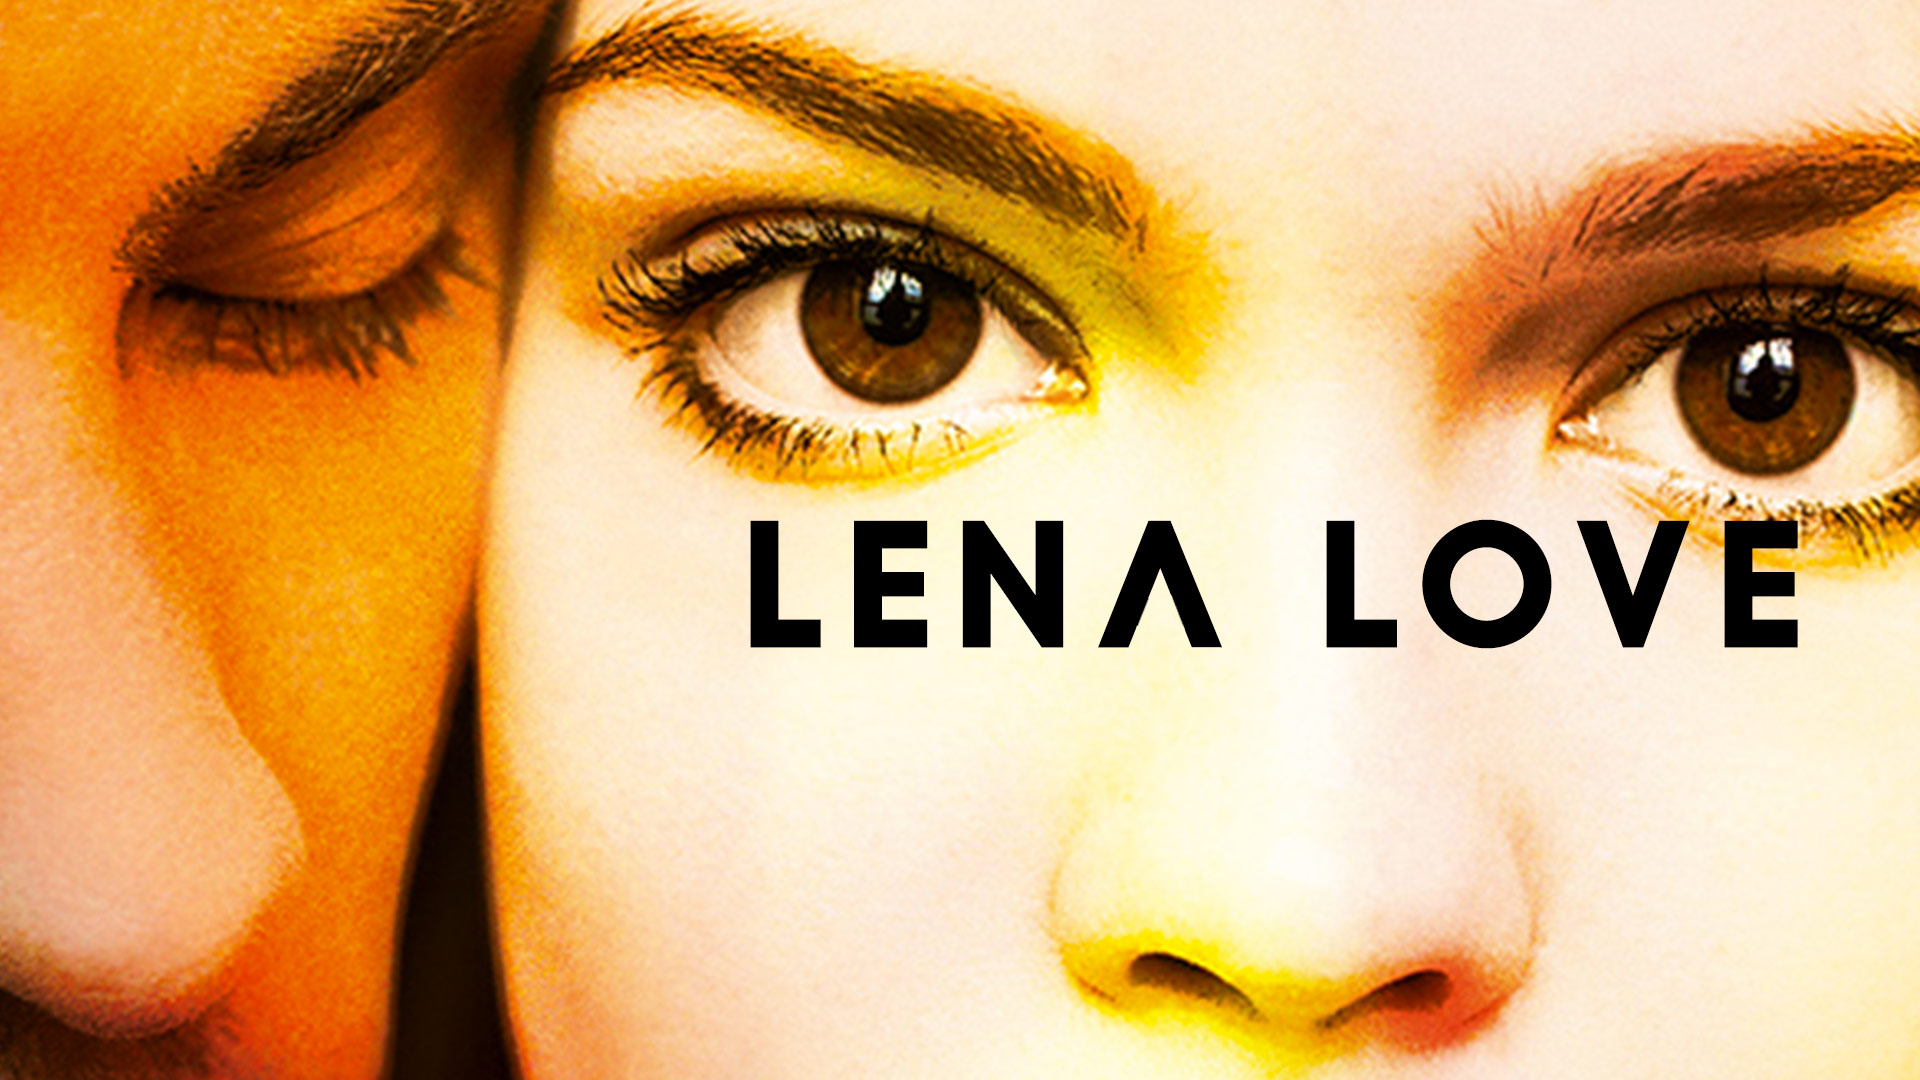 Лена лове. For the Love of Lena.